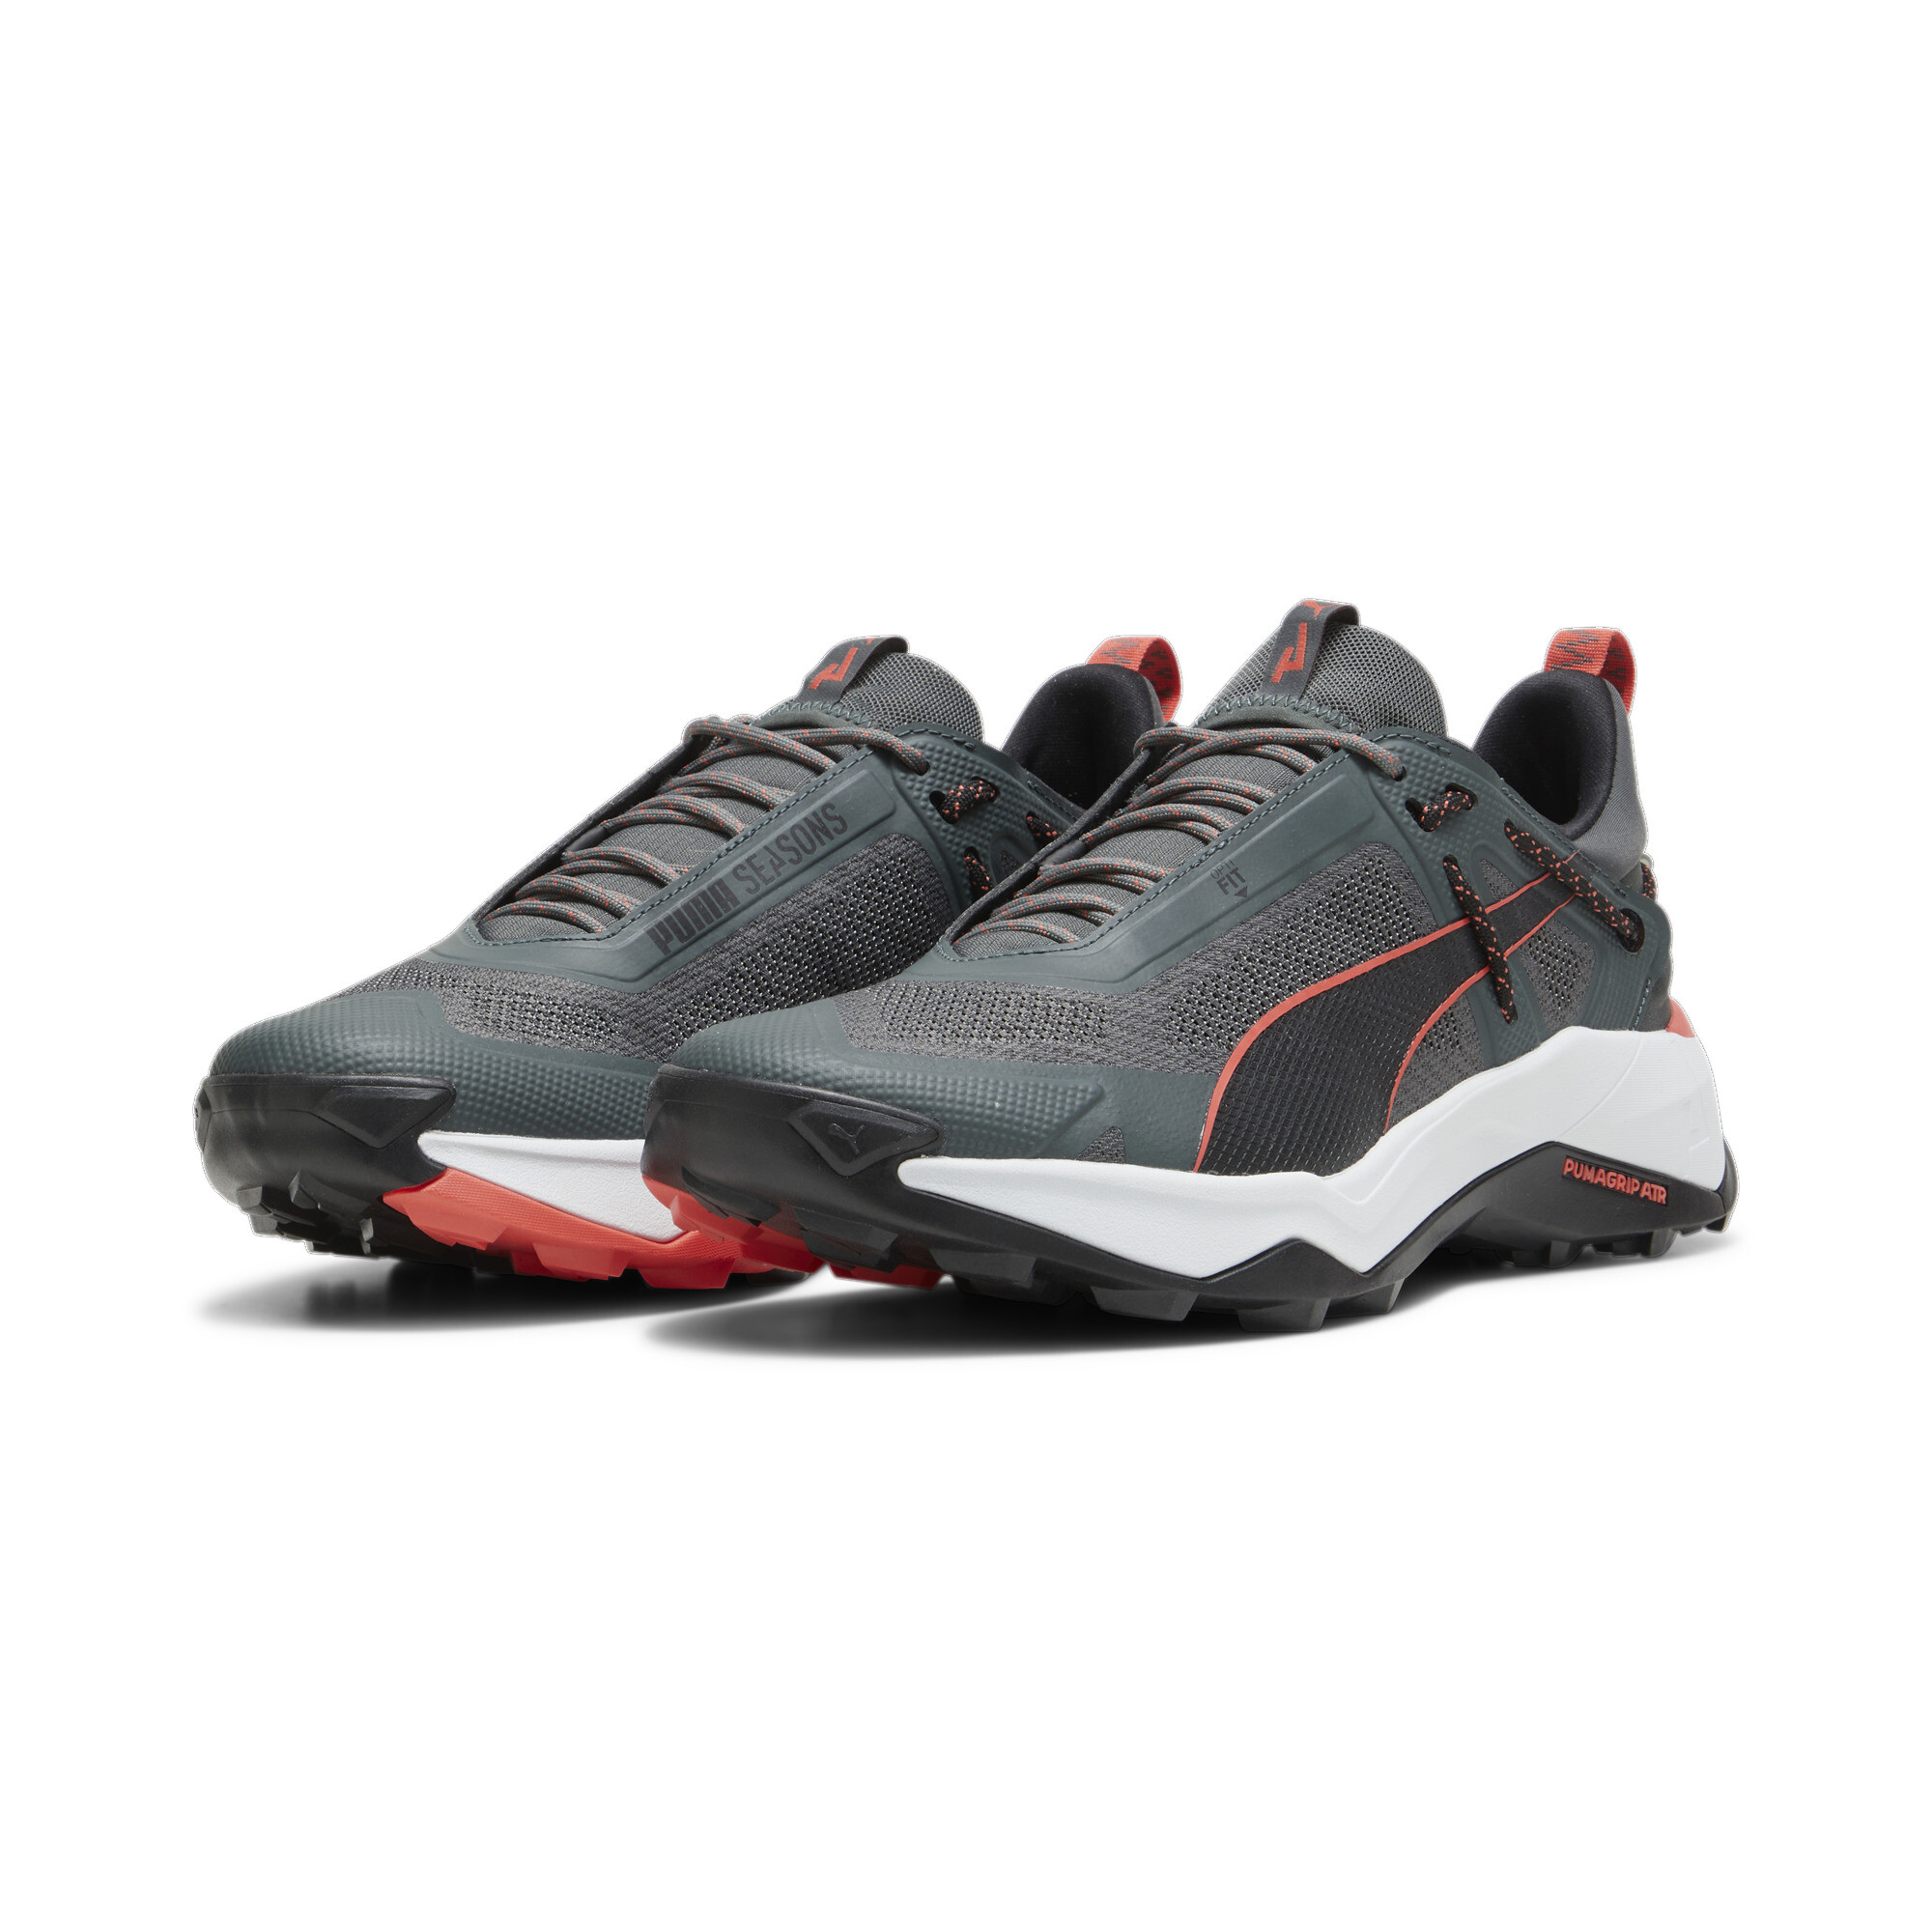 Men's PUMA Explore NITROâ¢ Hiking Shoes In Gray, Size EU 42.5